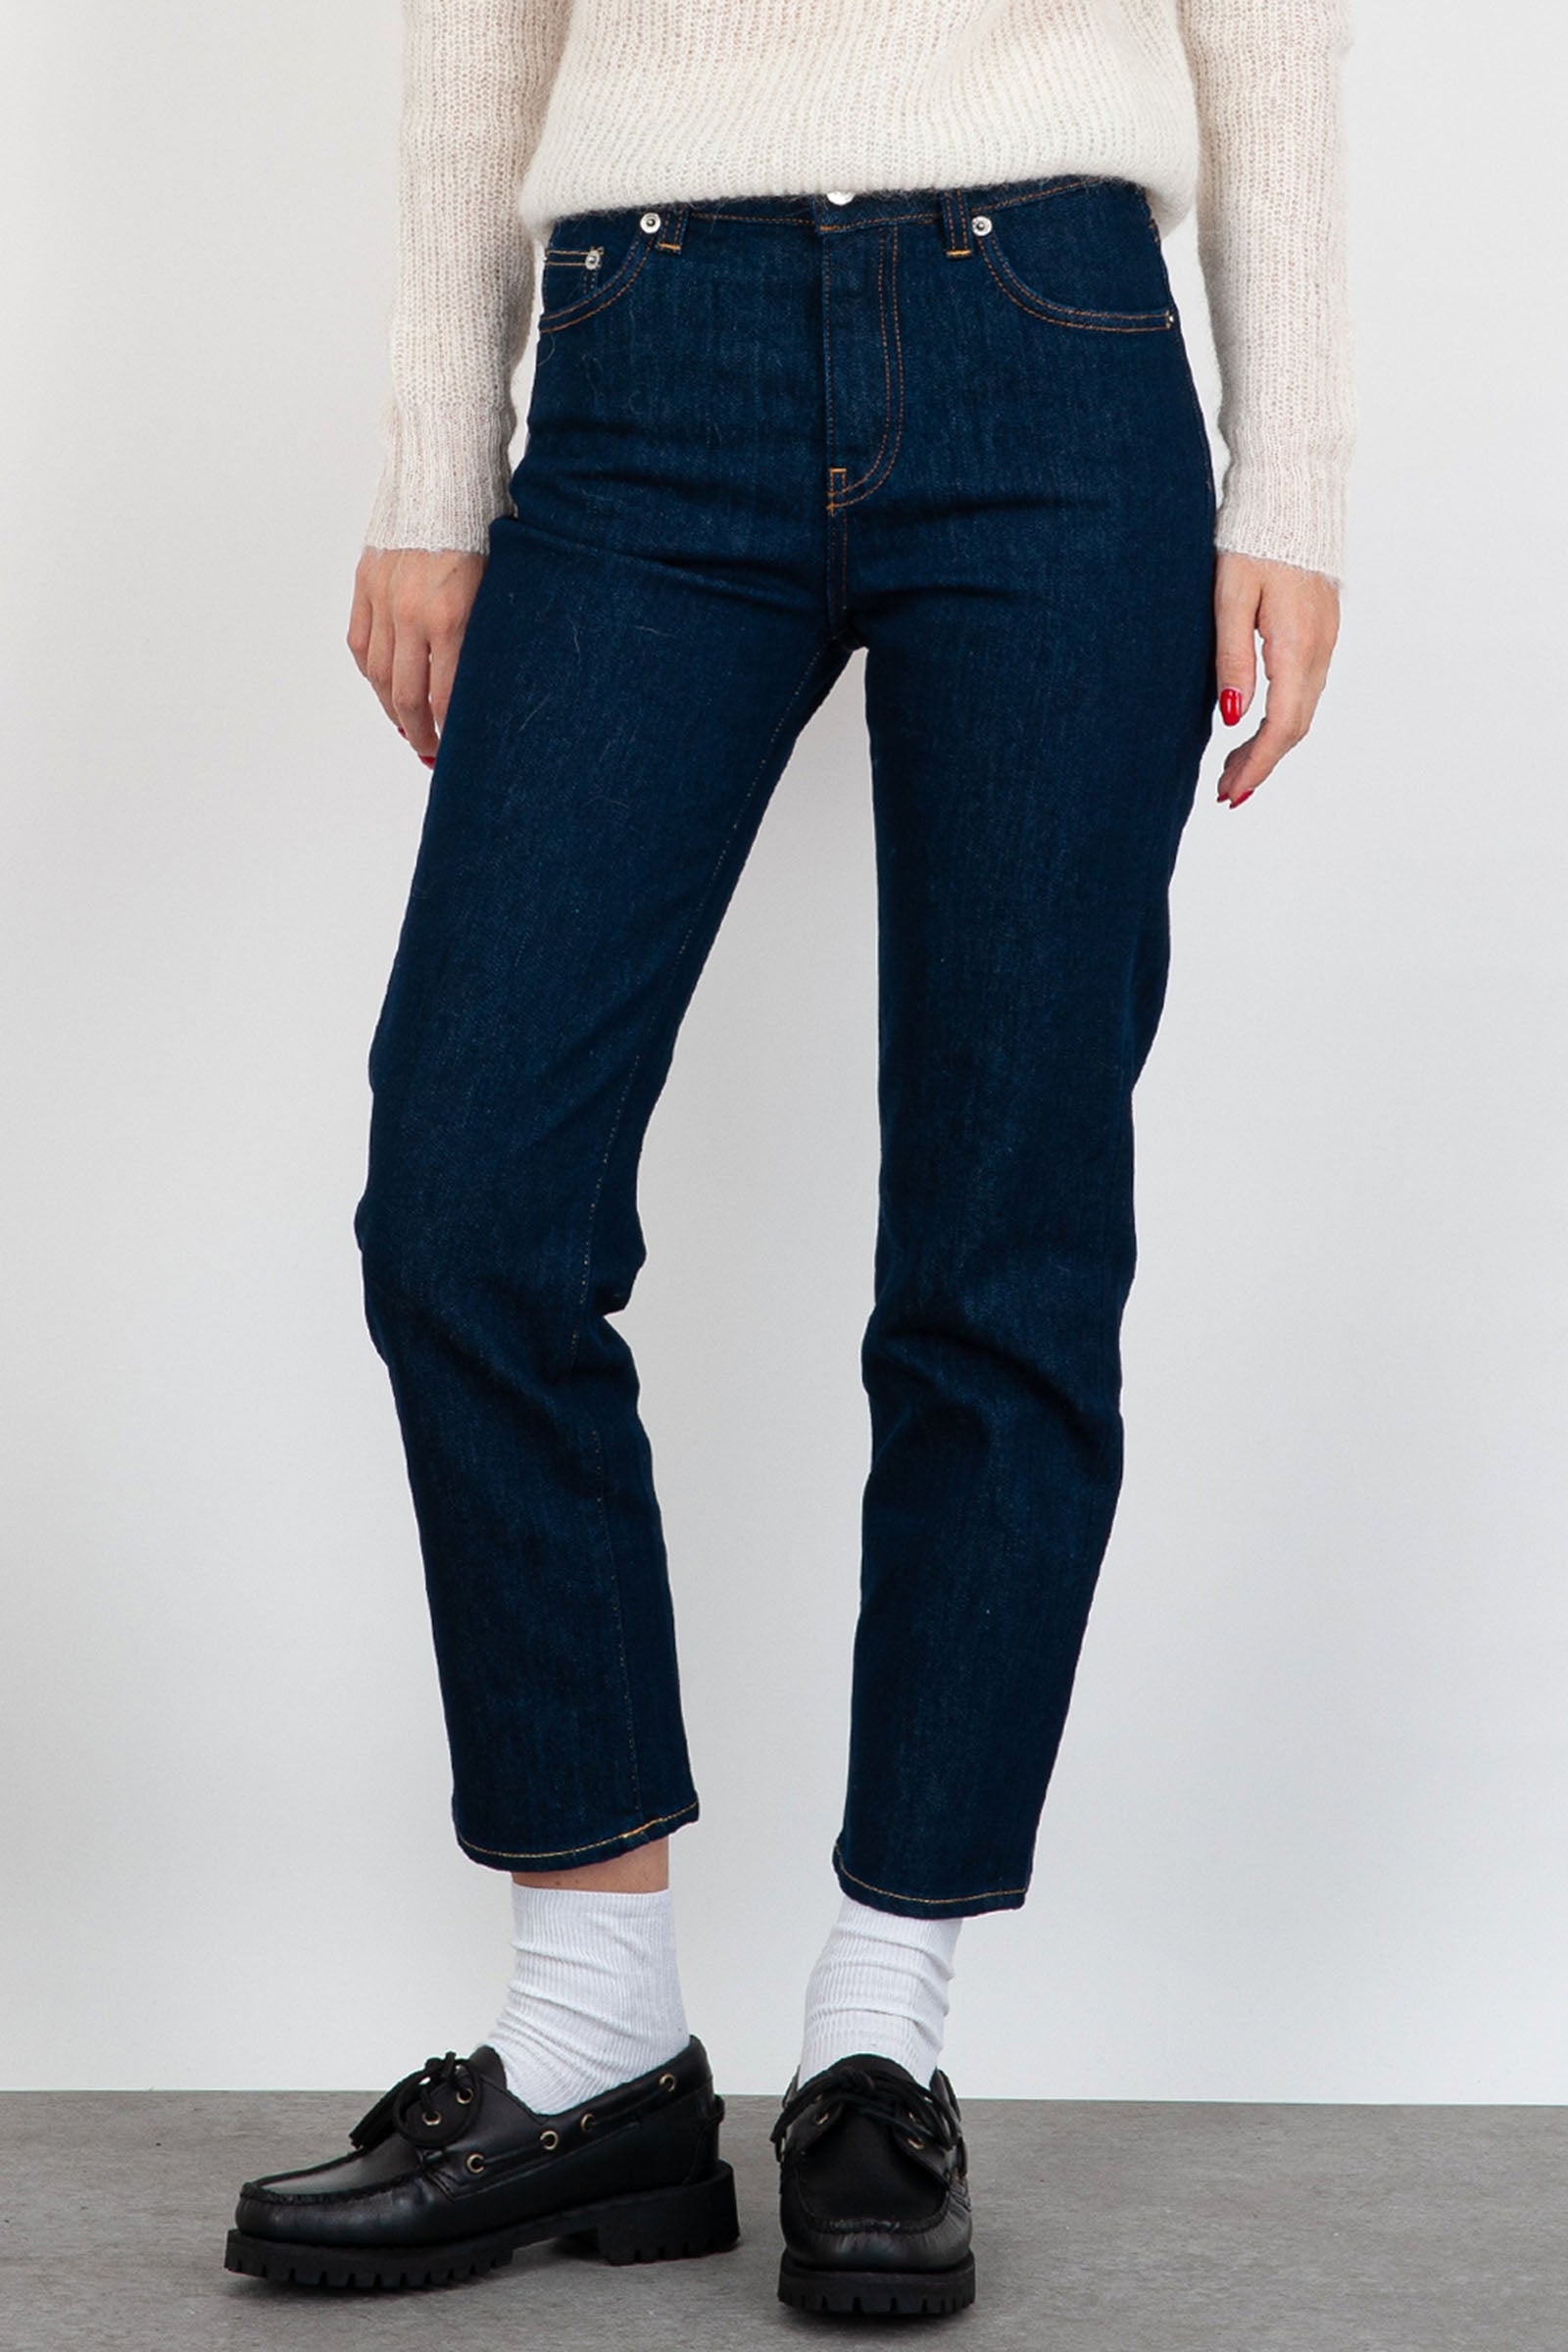 Adid Medium Blue Women's Jeans - 4